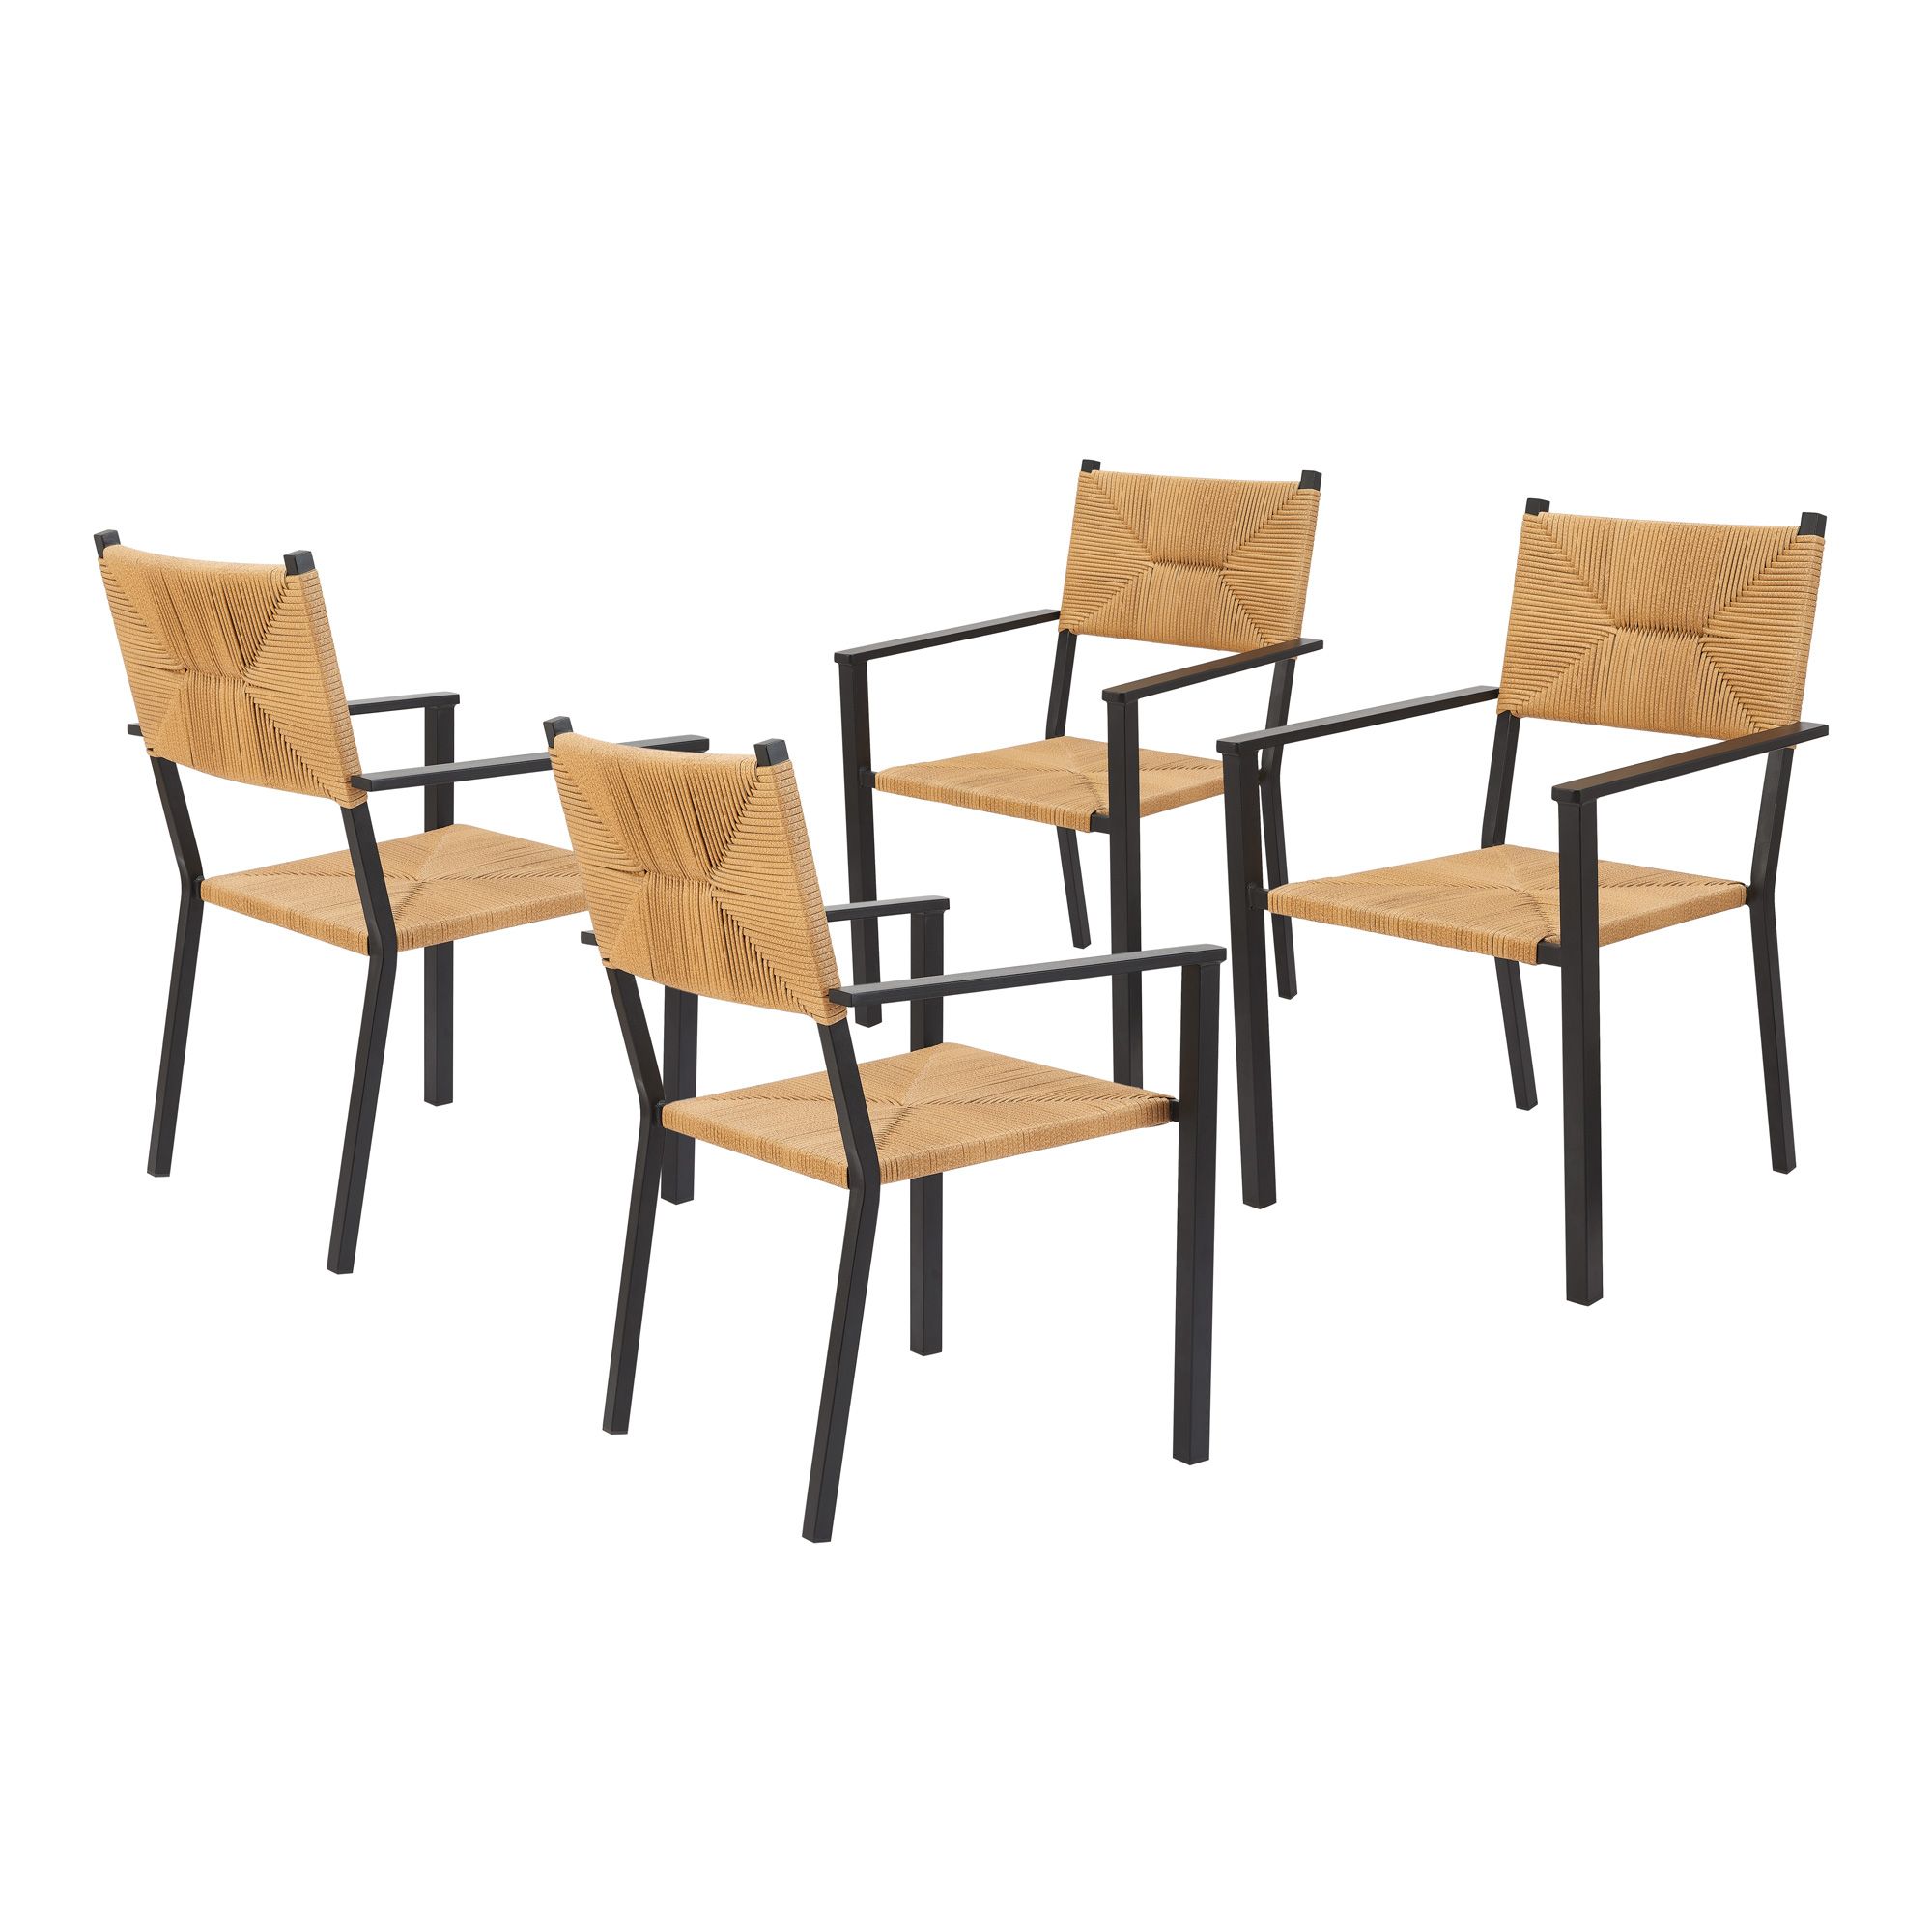 Better Homes & Gardens Ventura 4-Piece Outdoor Patio Dining Chair Set, Black, Four Chairs | Walmart (US)